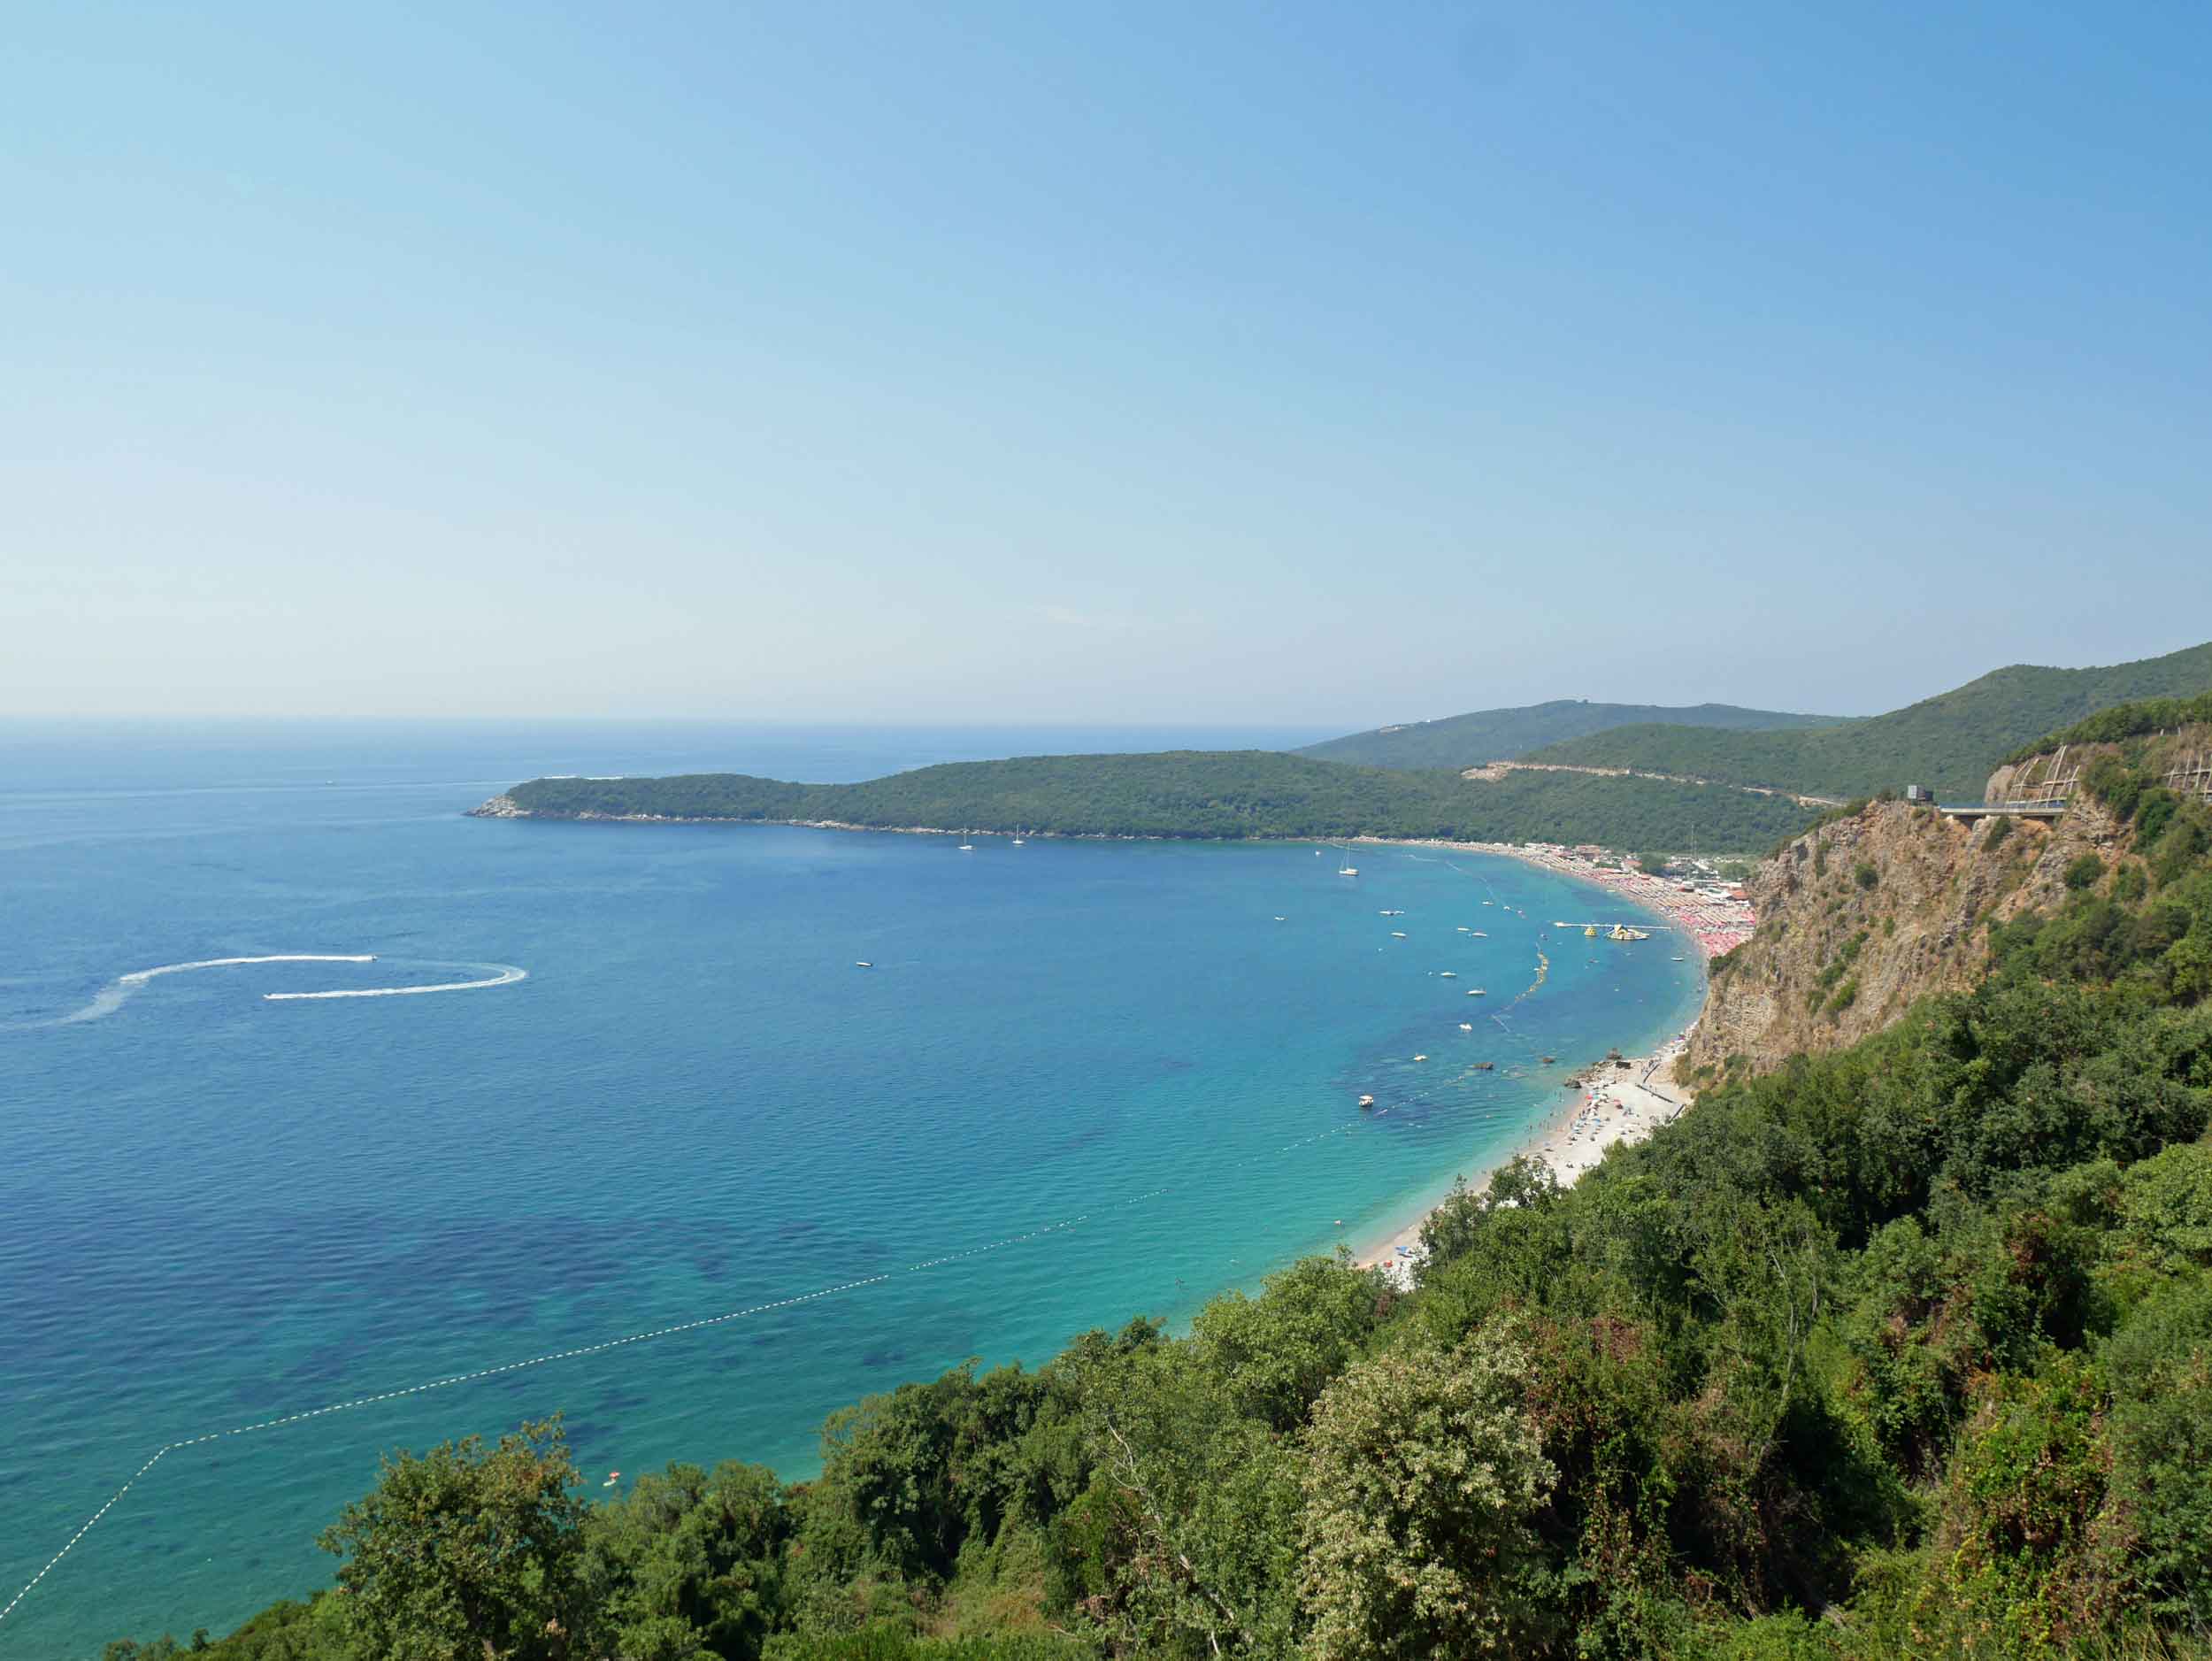  The cliffside views overlooking Montenegro's famous Jaz Beach (Aug 8).&nbsp; 